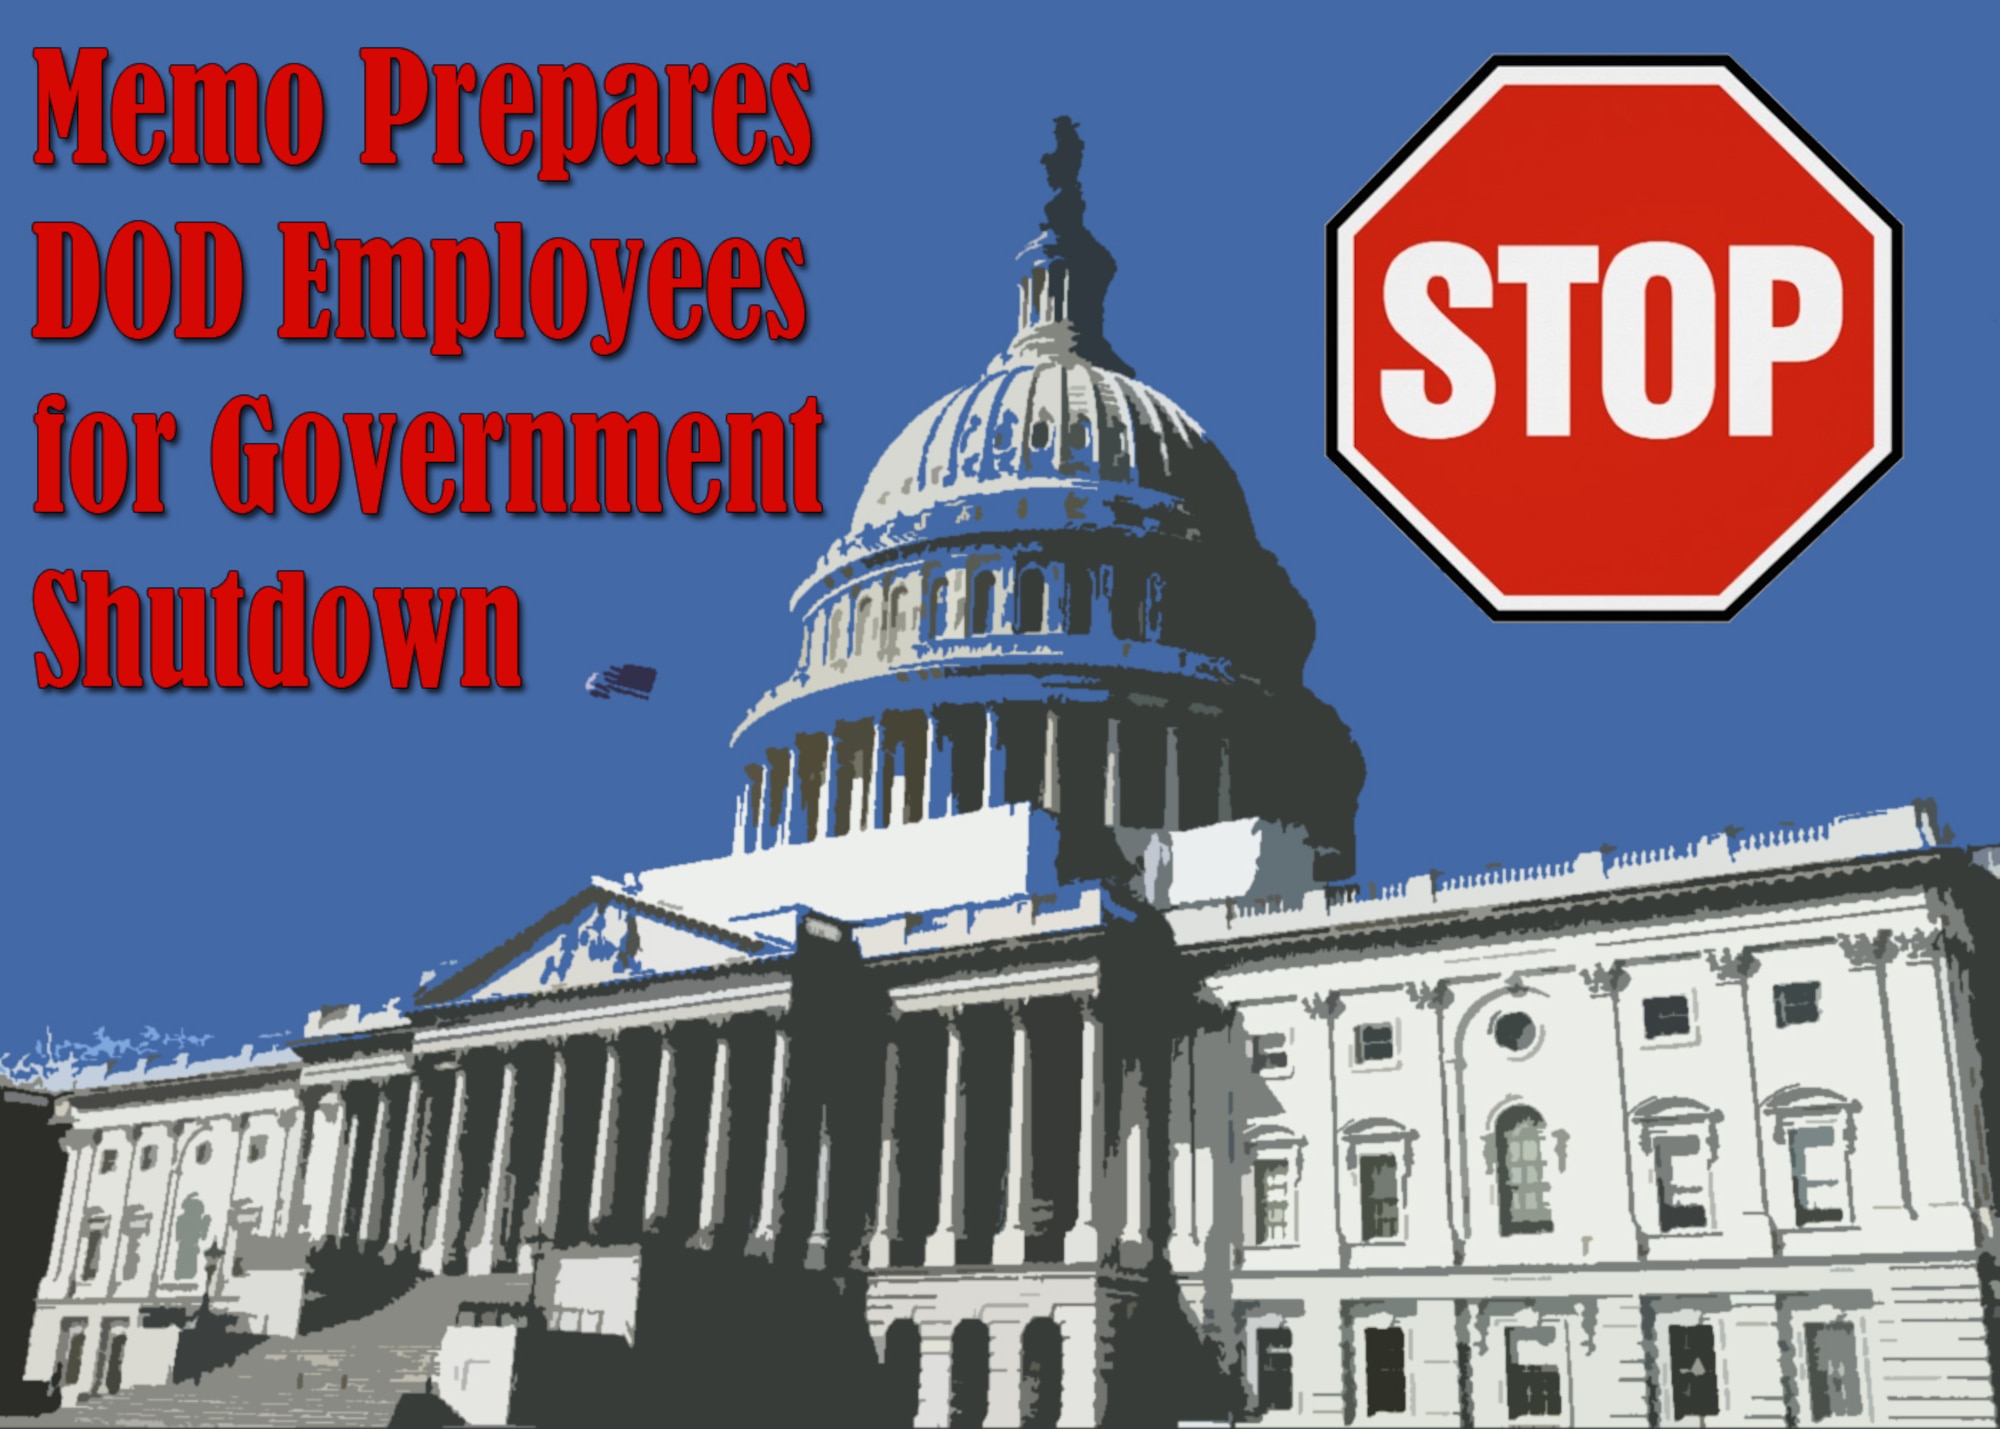 Memo prepares DOD employees for government shutdown > Homestead Air